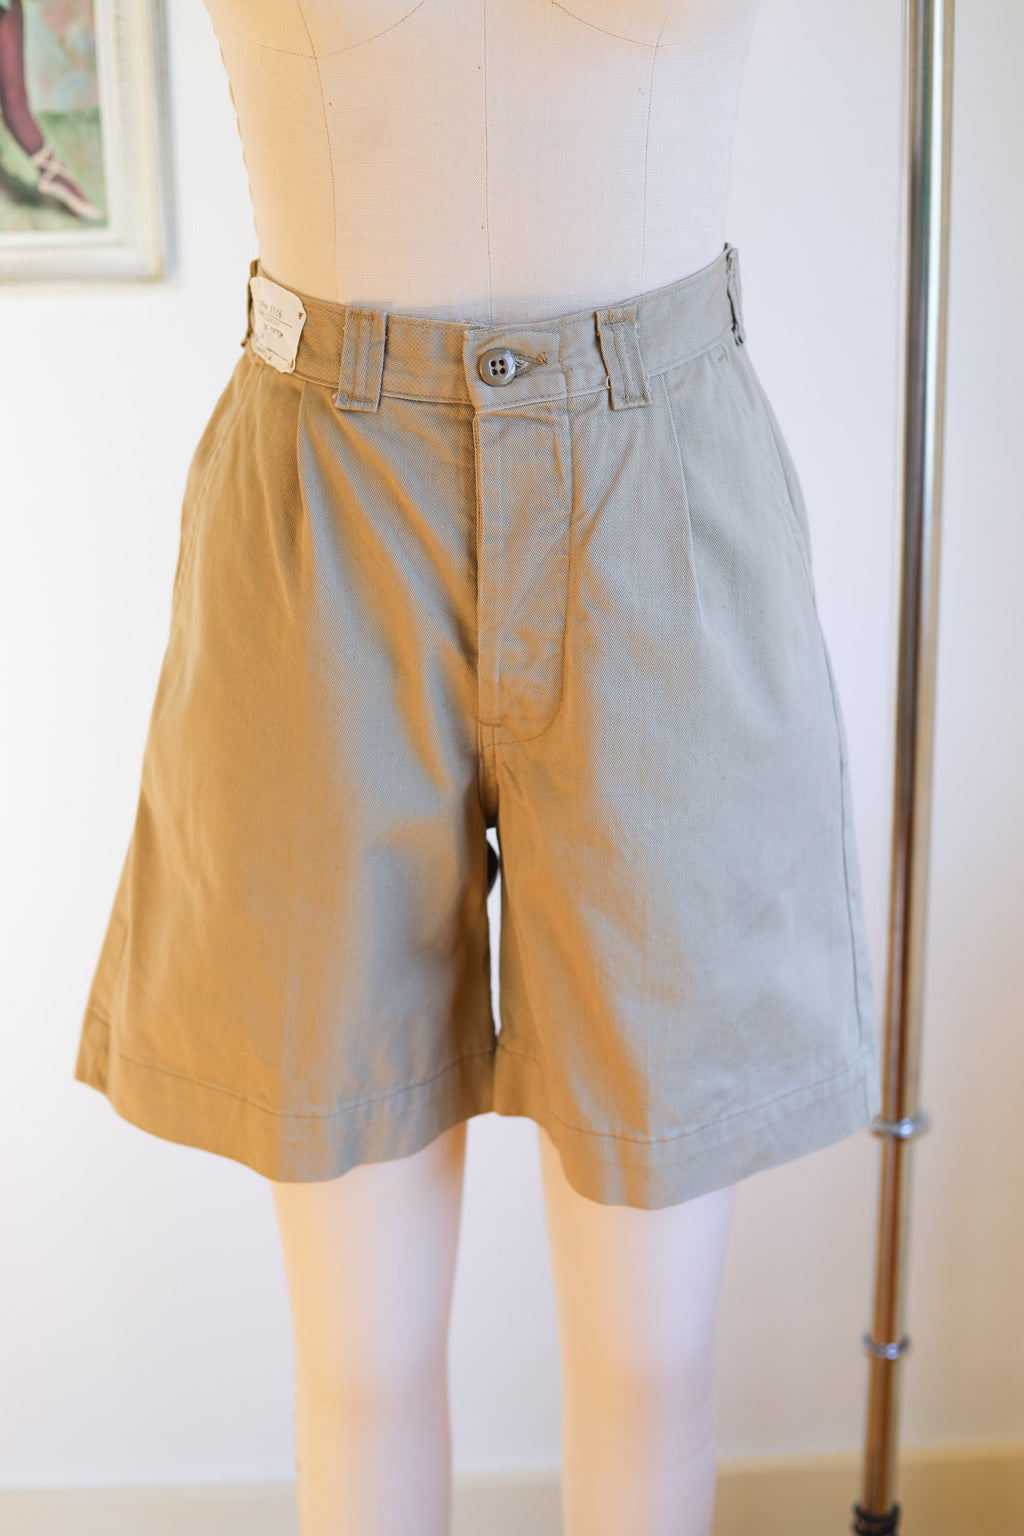 RARE Vintage 1980s does 1940s Deadstock Khaki Cotton Twill Adventure Utility Shorts -- Choose Your Pair!